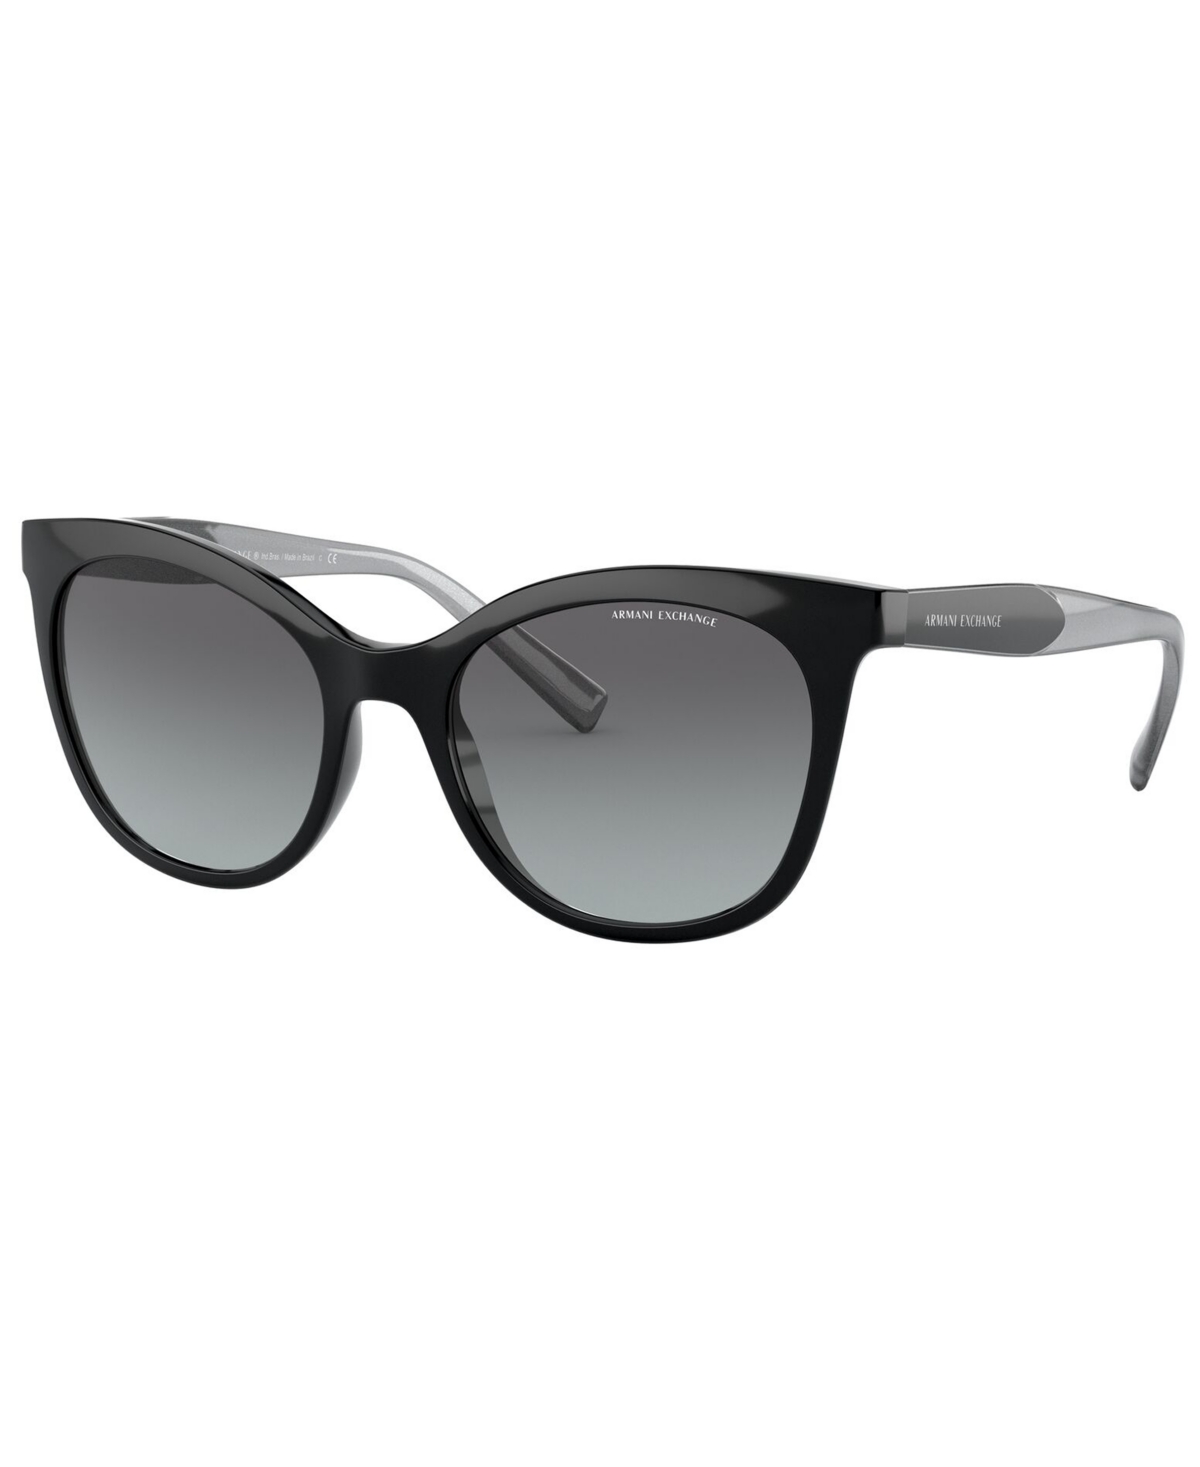 Ax Armani Exchange Armani Exchange Women's Sunglasses, Ax4094s In Black,grey Gradient